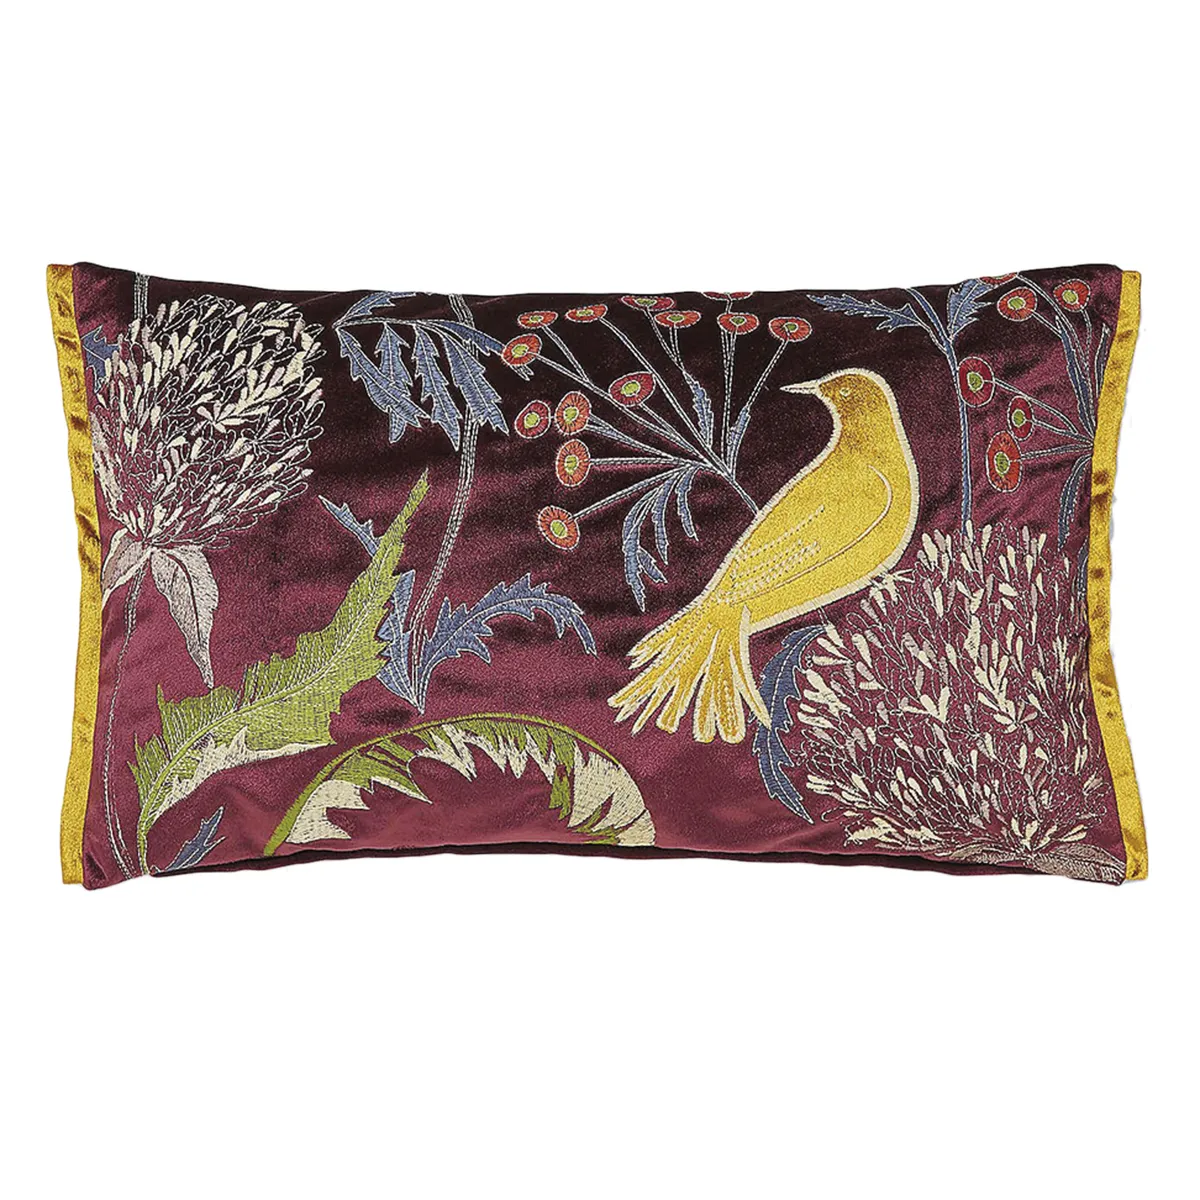 Embroidered bird cushion, £15, Dunelm